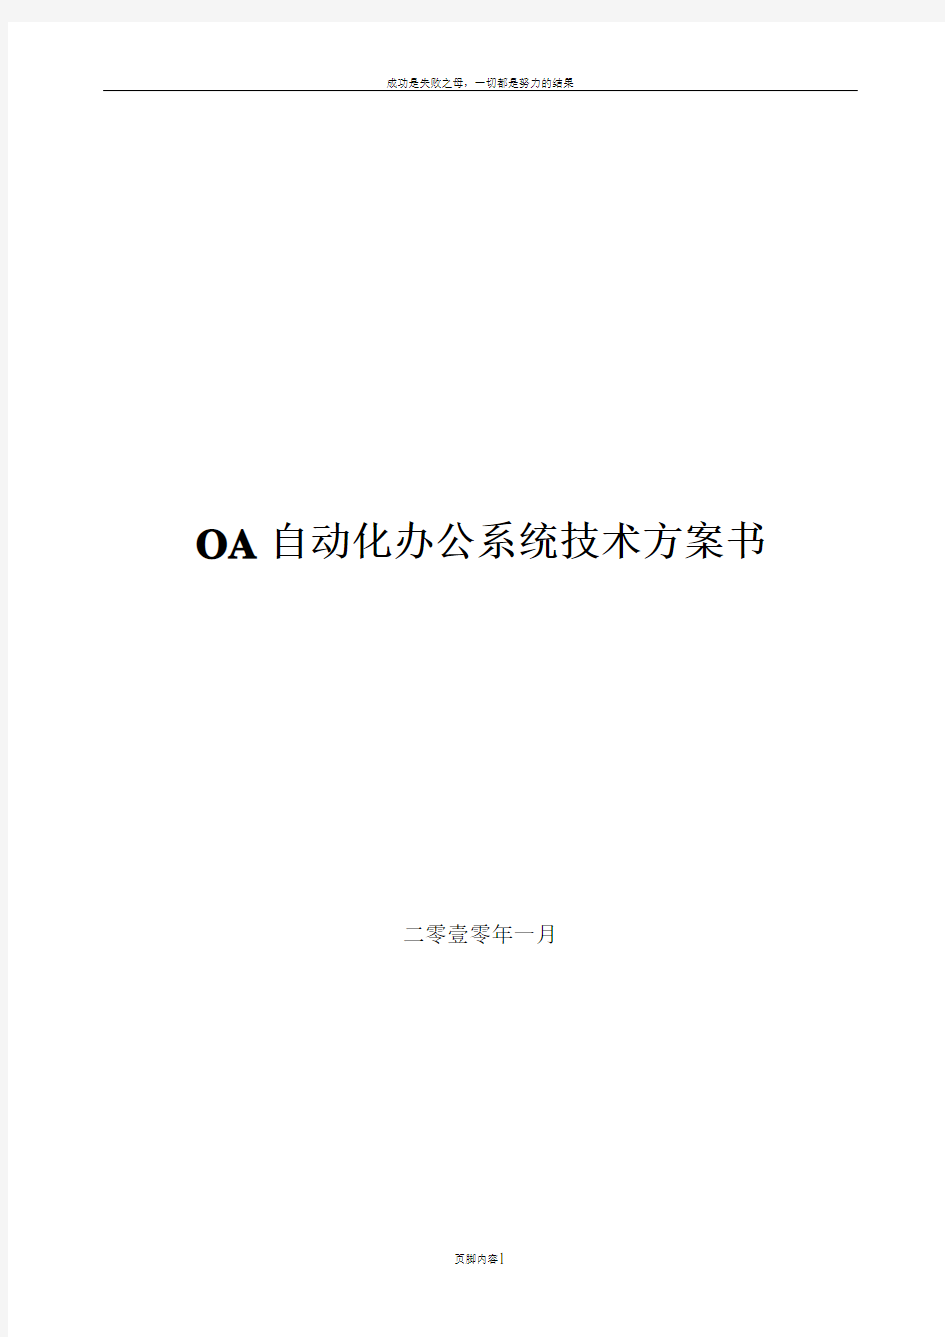 OA自动化办公系统技术方案书